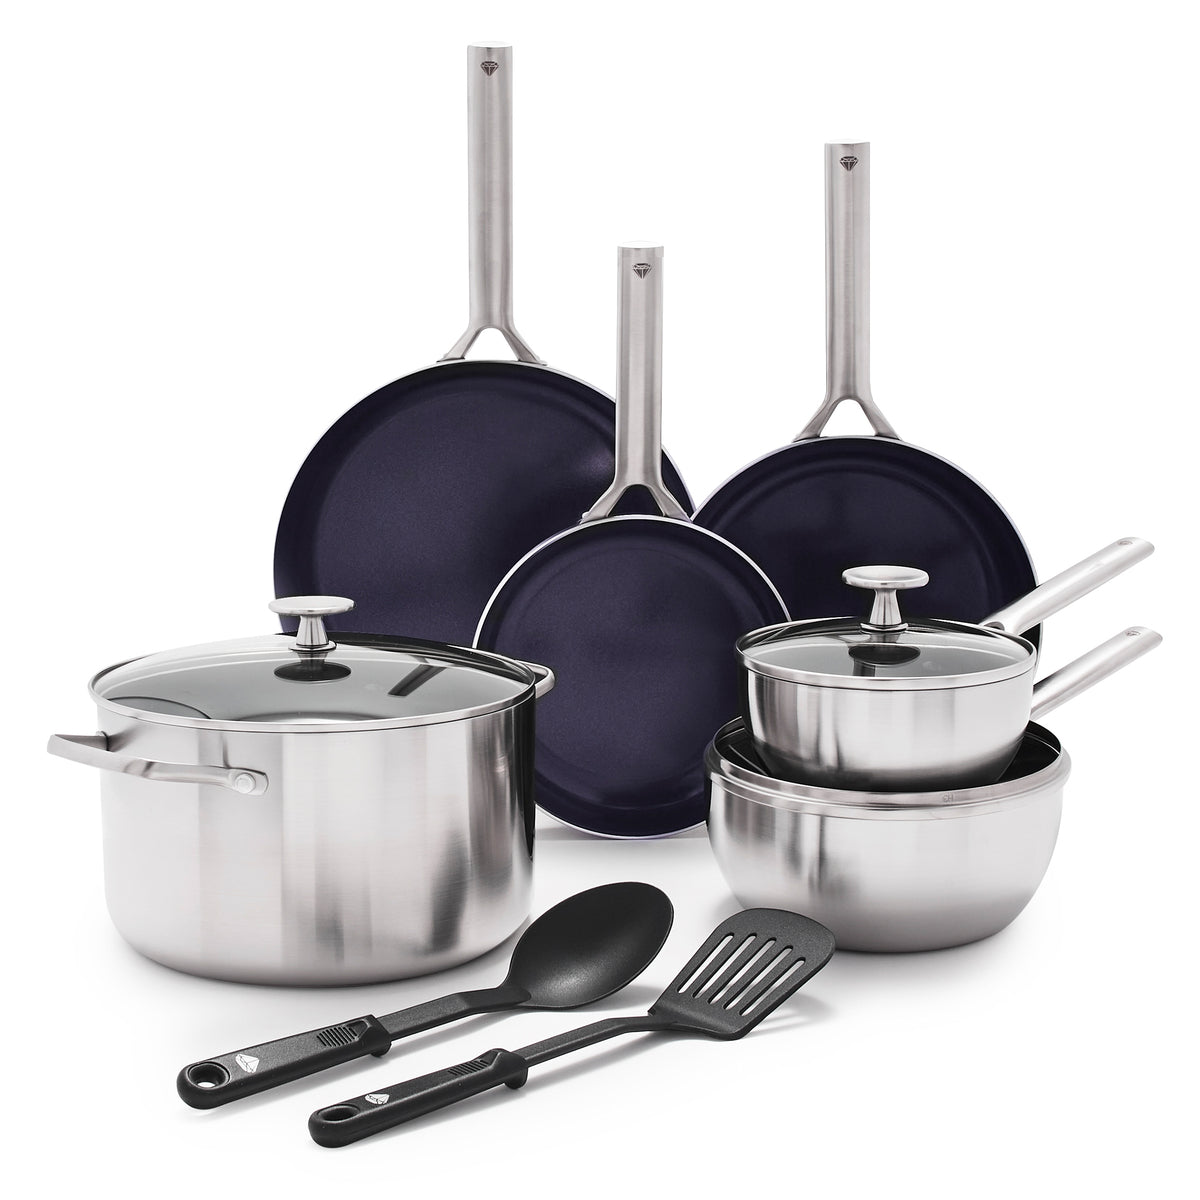 Pots and Pans Set with Premium Nonstick Coating, 5-Piece Kitchen Cookware  Sets PFOA & PFAS Free, Pots and Pans Cooking Utensils Set